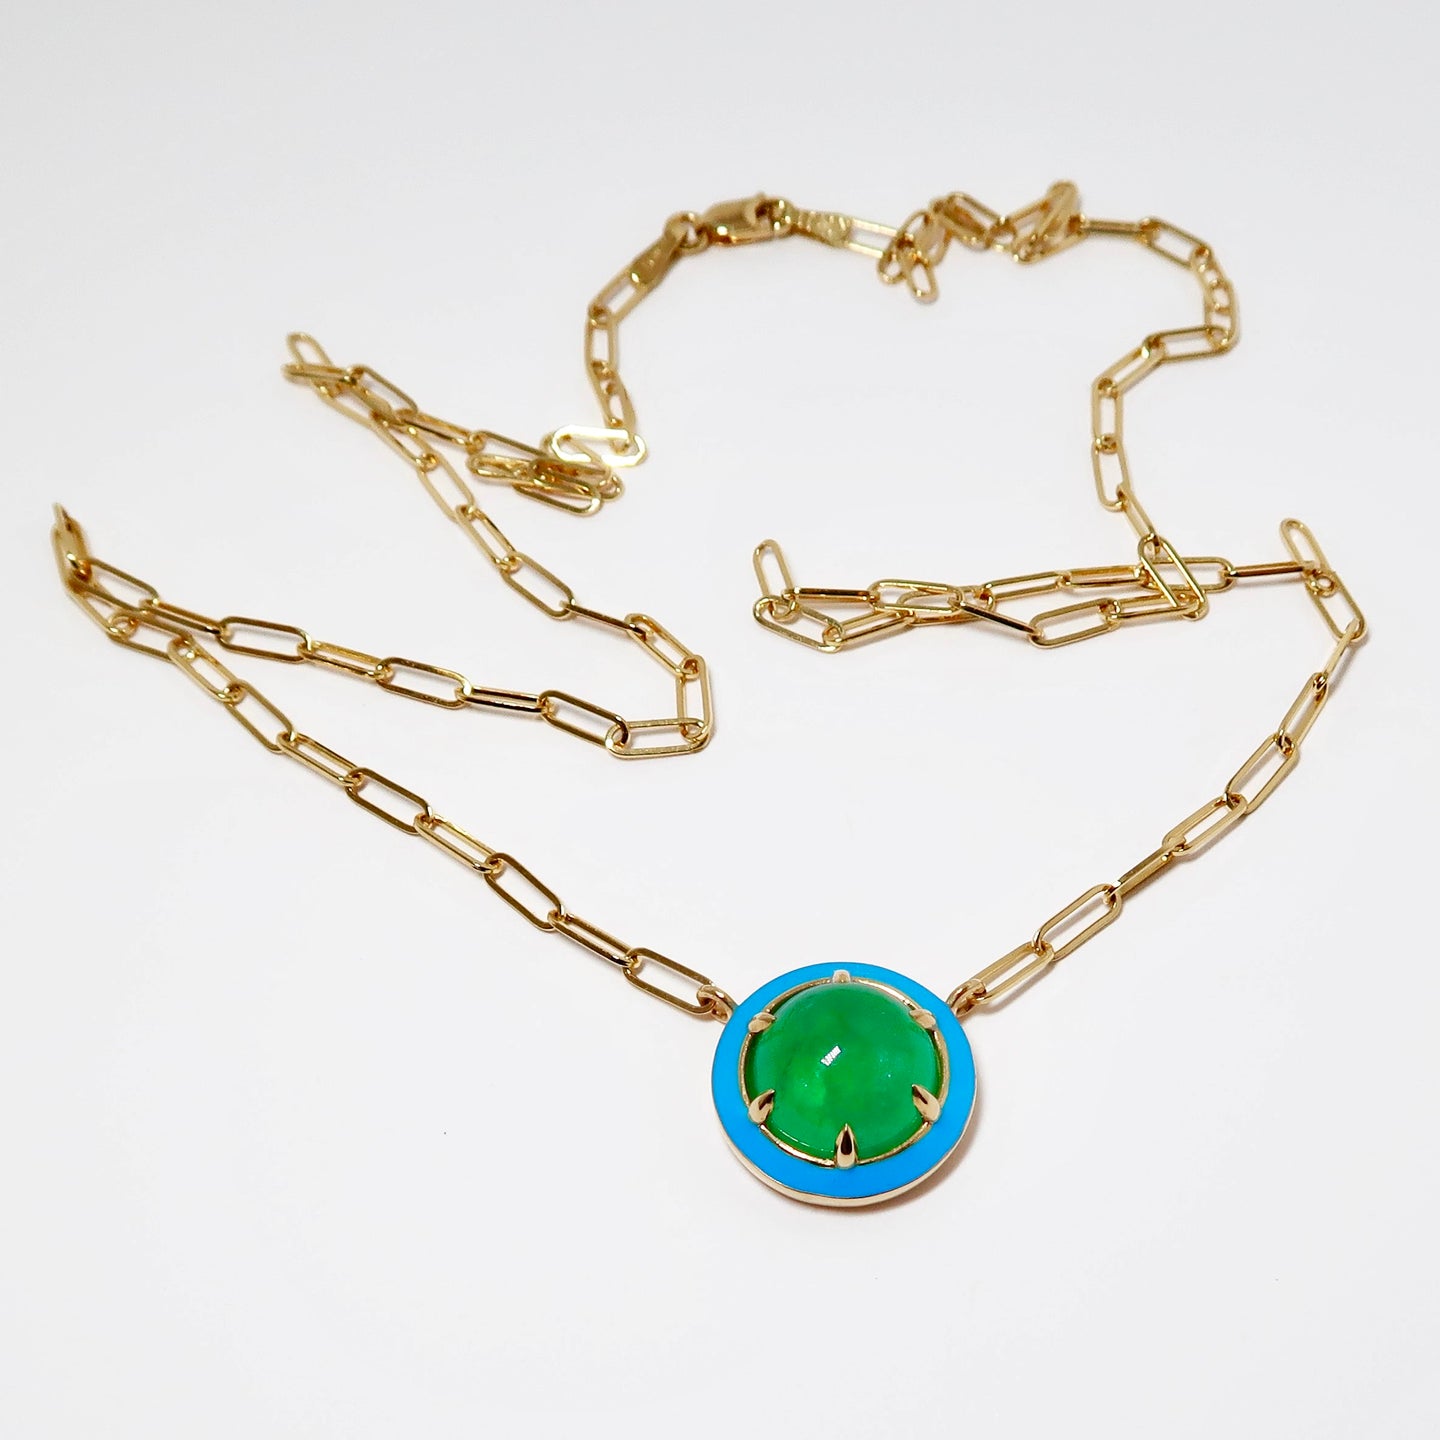 Emerald, Cabochon Pendant with Turquoise Enamel